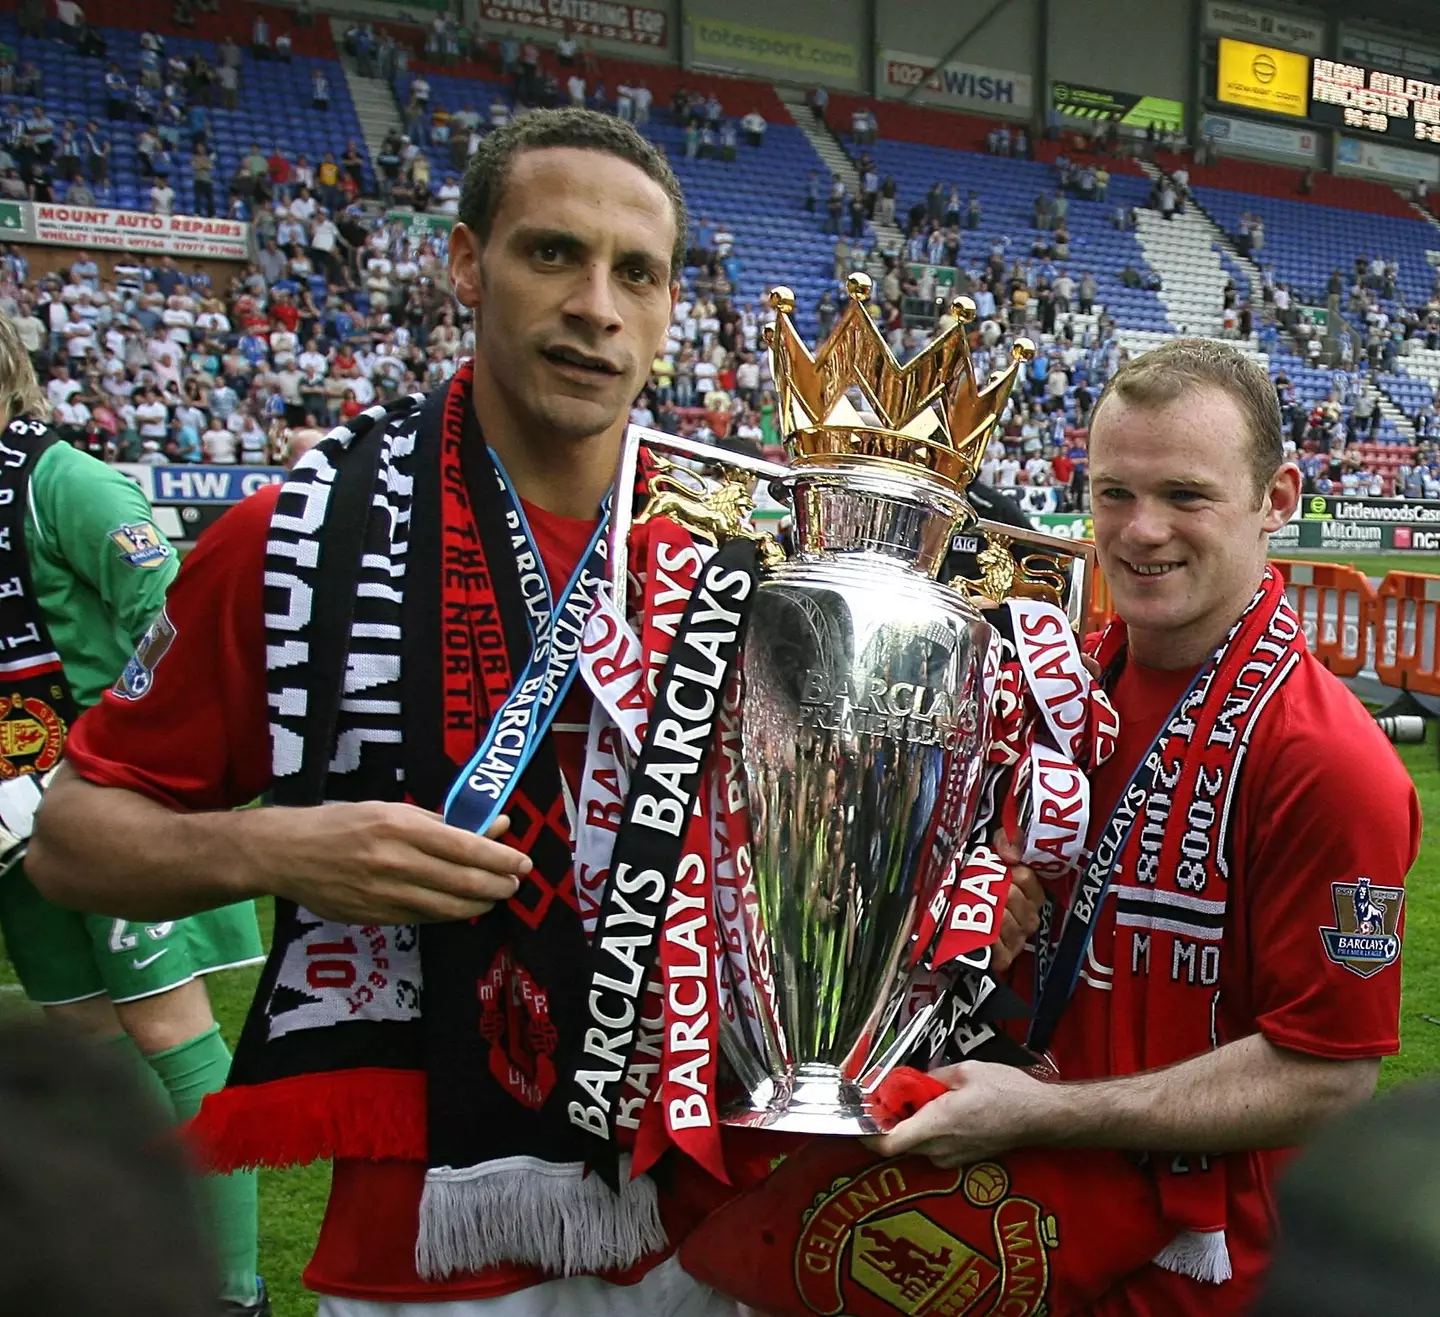 Ferdinand enjoyed his best years of his career at Man United, winning numerous trophies under Sir Alex Ferguson (Image: Alamy)